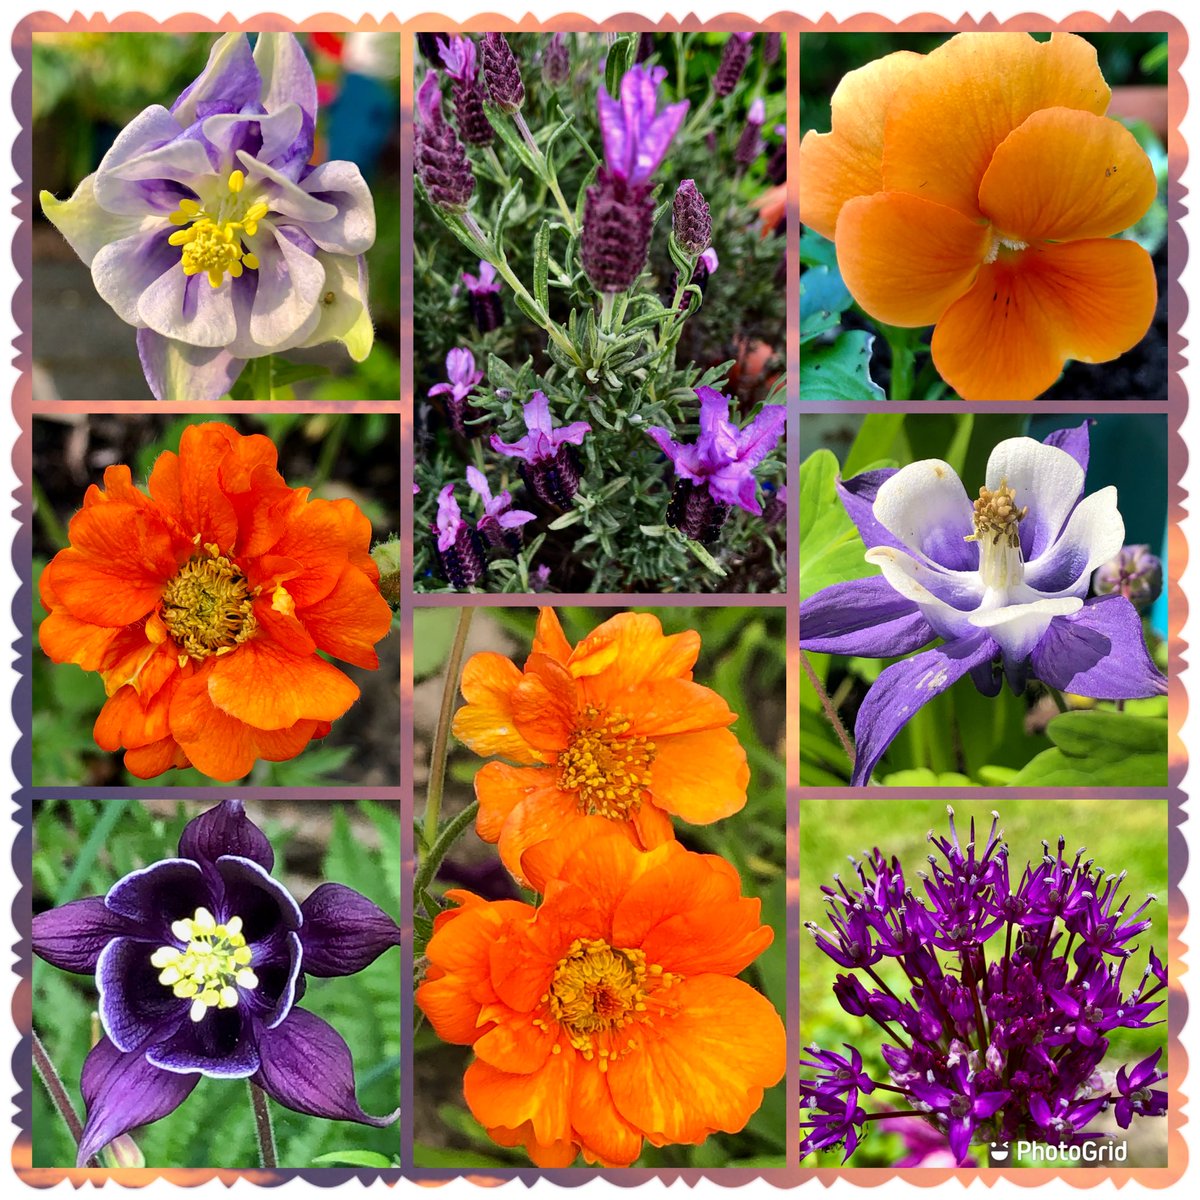 Just love orange & purple 💜🧡looking good in the garden #thursdayvibes #Orange #Purple #Flowers #MyGarden #Gardening